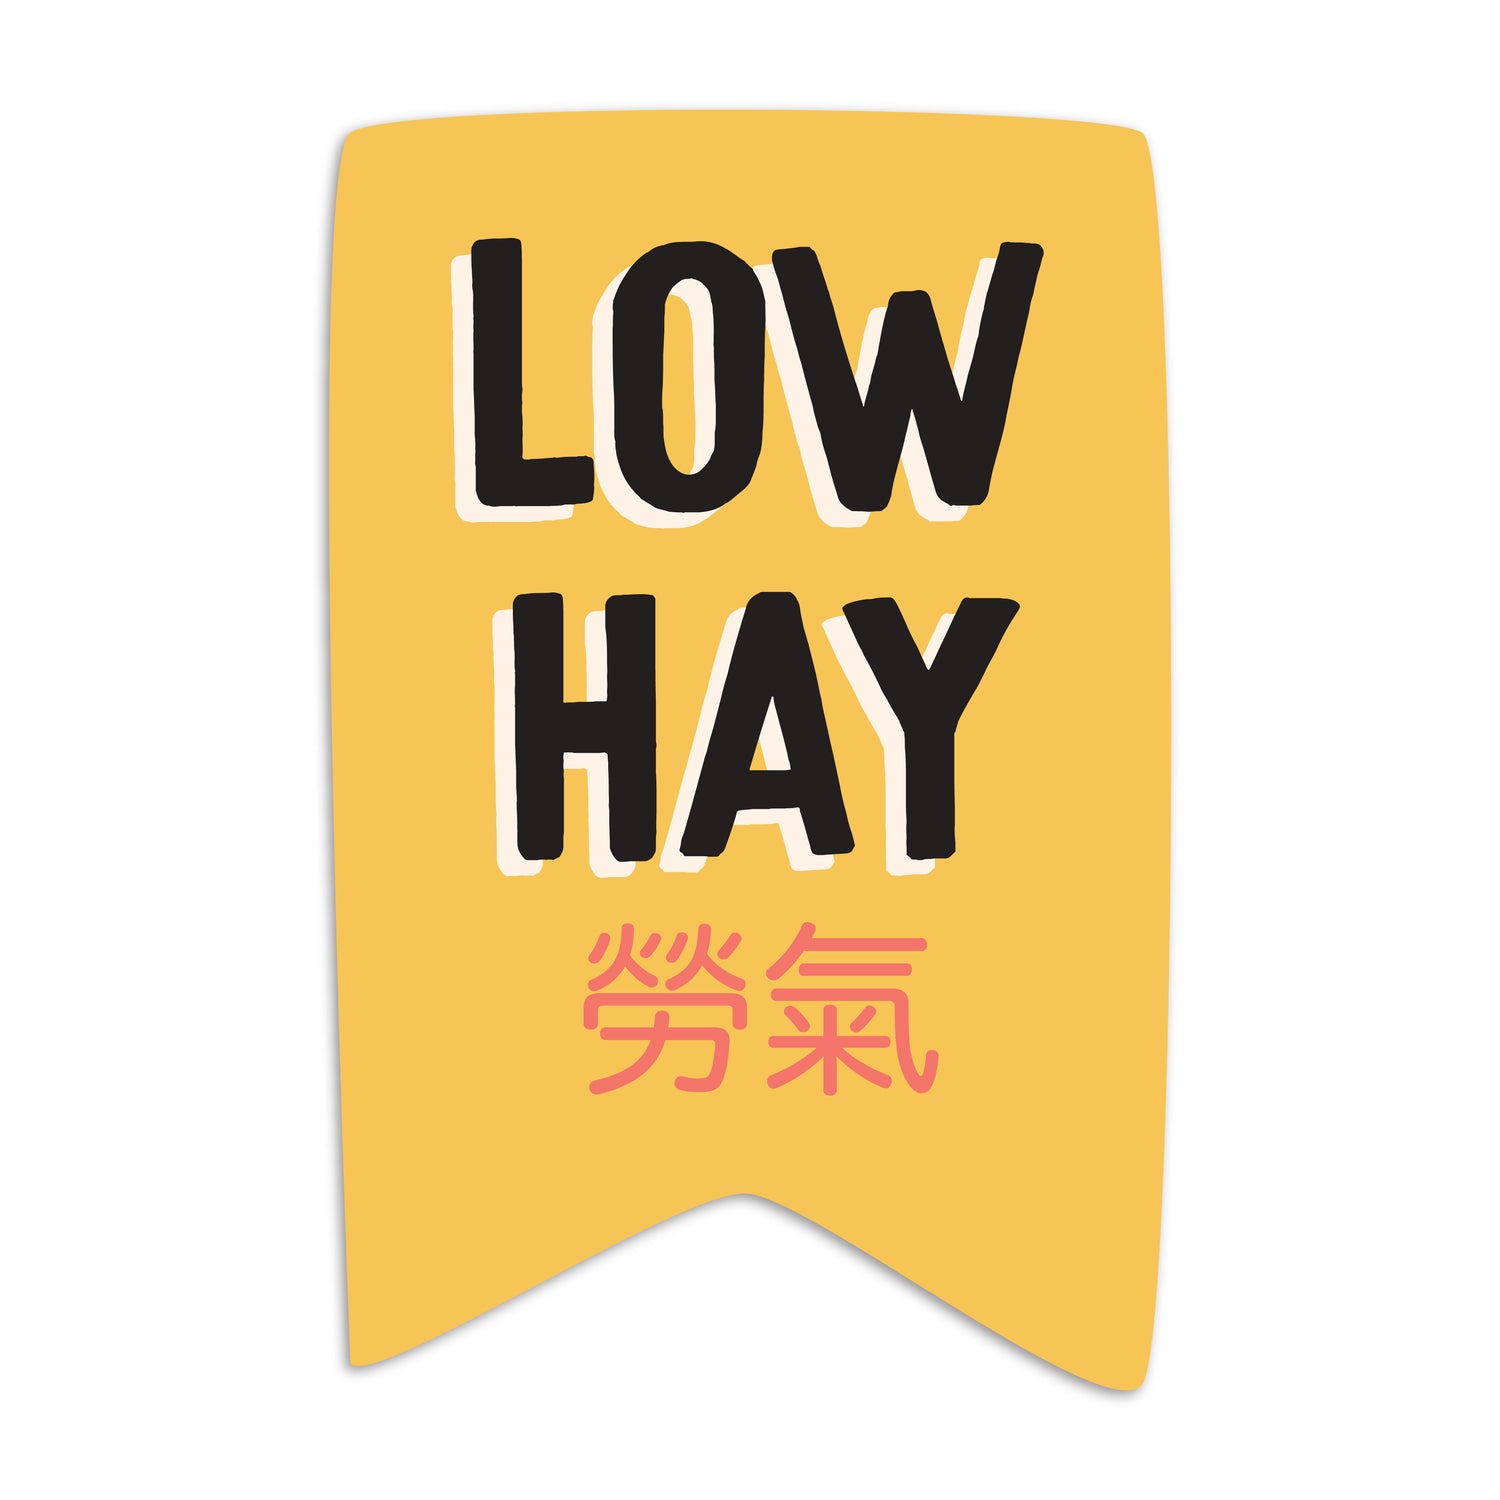 Low hay (勞氣) vinyl sticker by I&